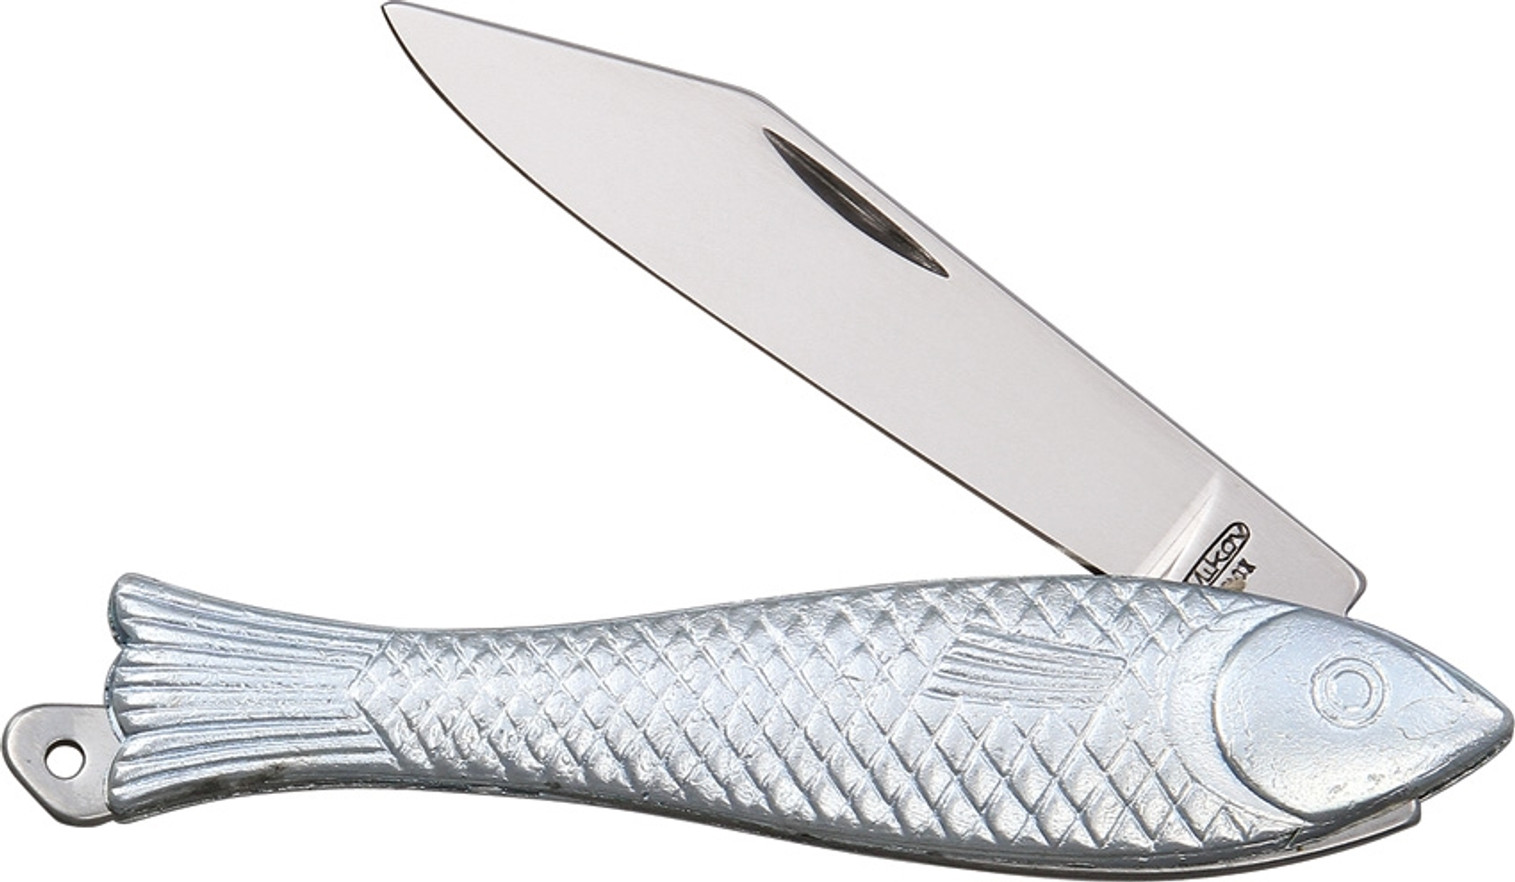 Fish Knife MIK#